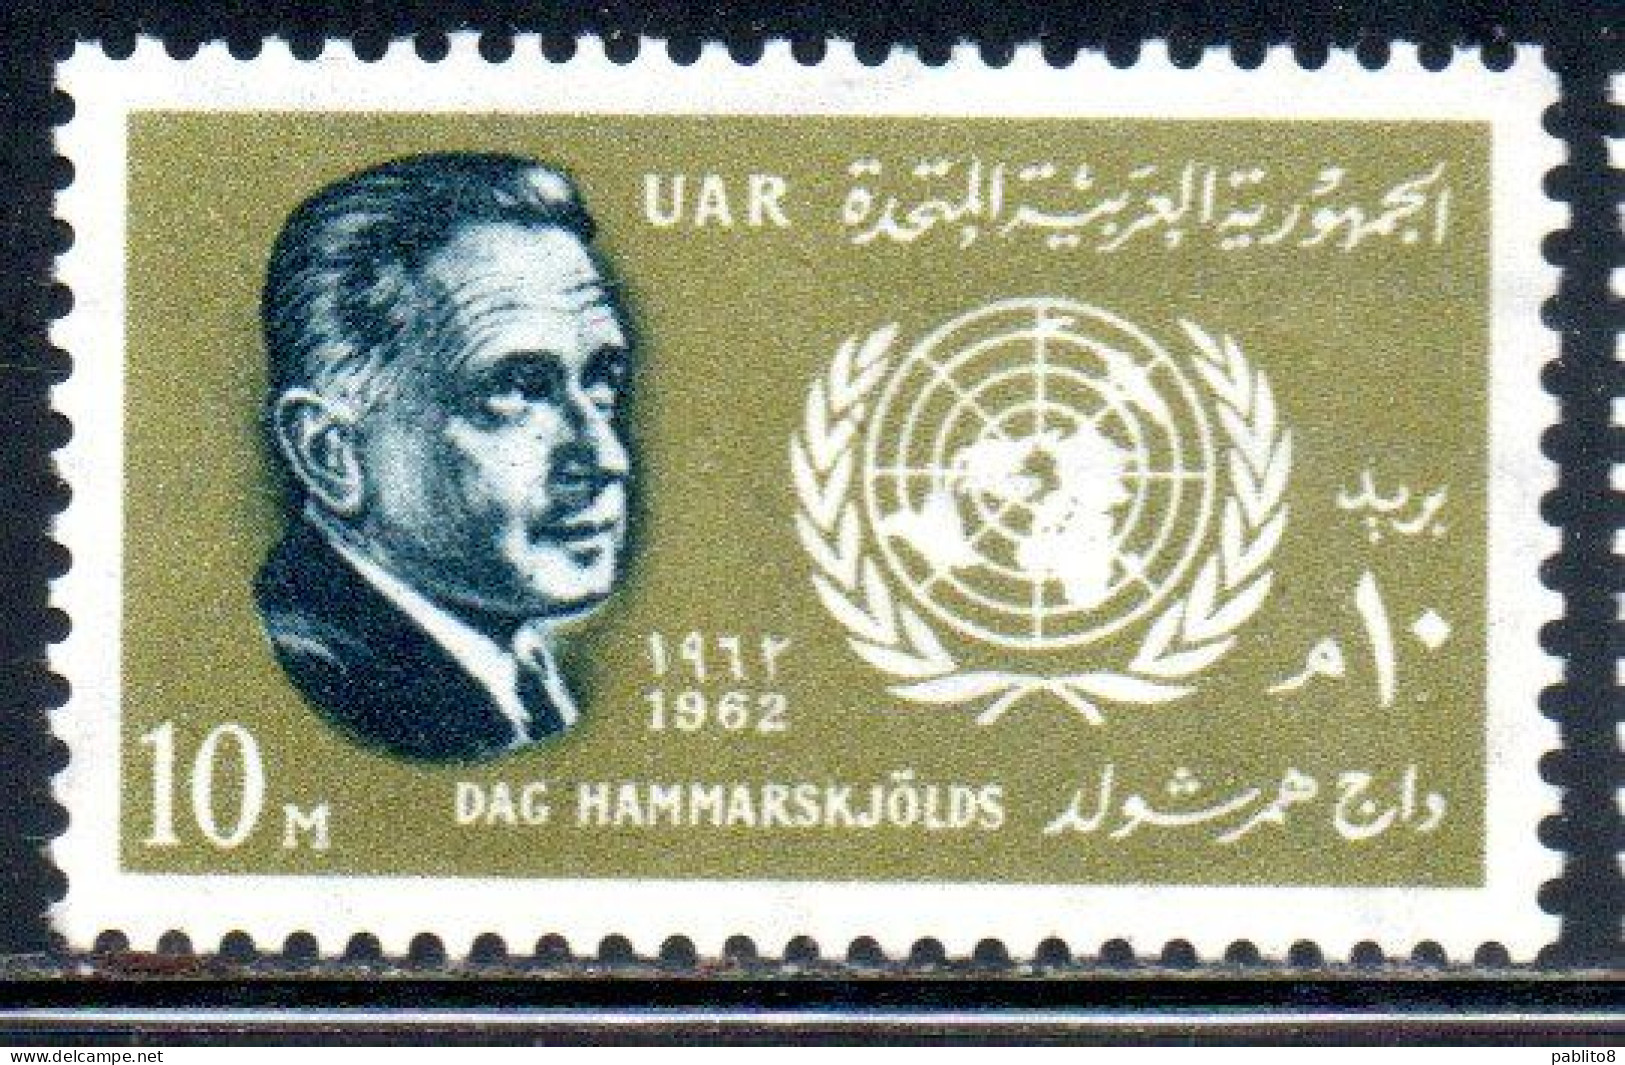 UAR EGYPT EGITTO 1962 DAG HAMMARSKJOLD SECRETARY GENERAL OF THE UN ONU 10m MNH - Nuevos